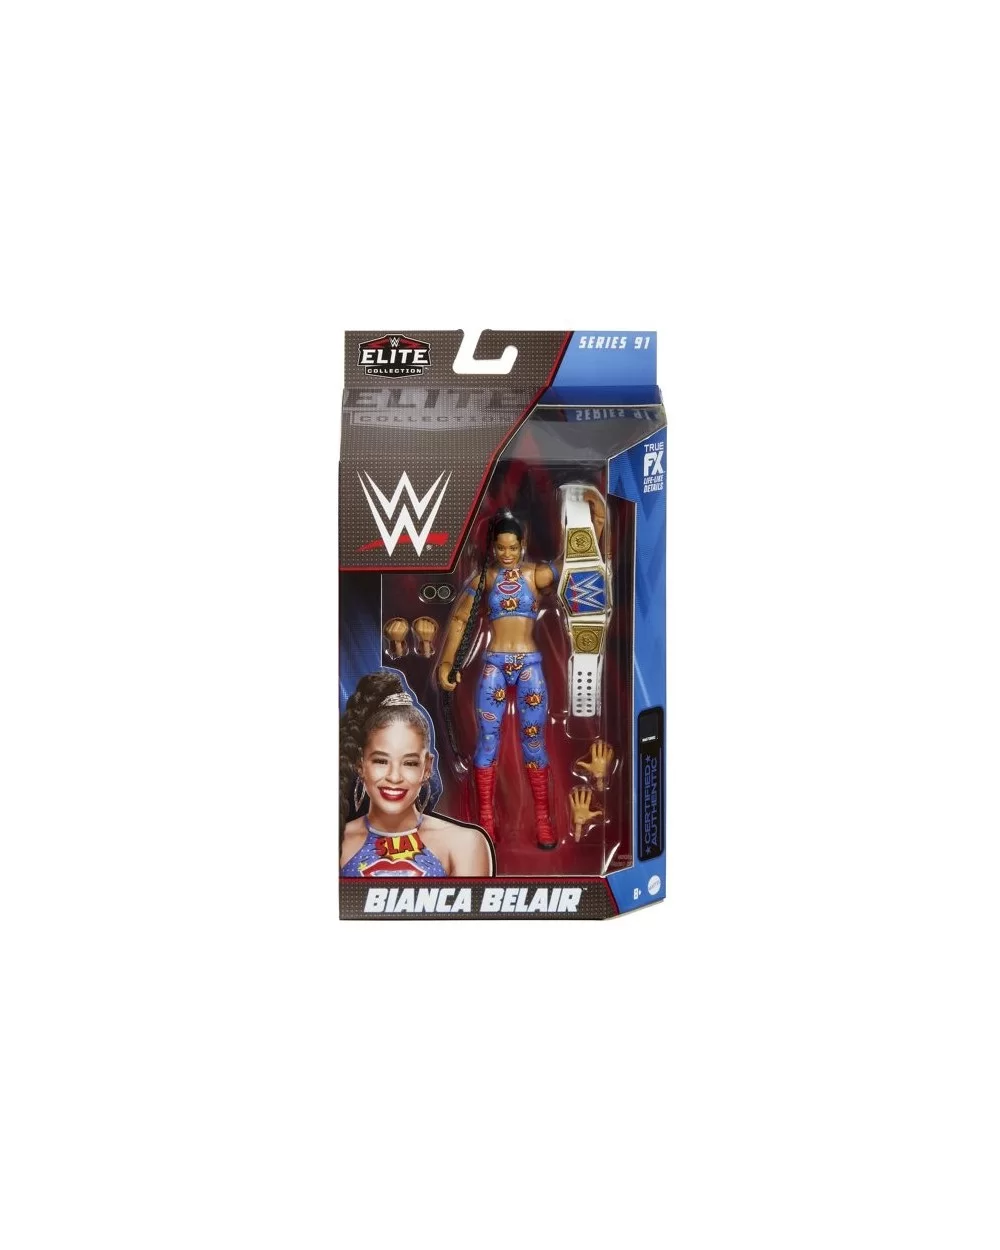 Bianca Belair - WWE Elite 91 $6.96 Toys & Figures